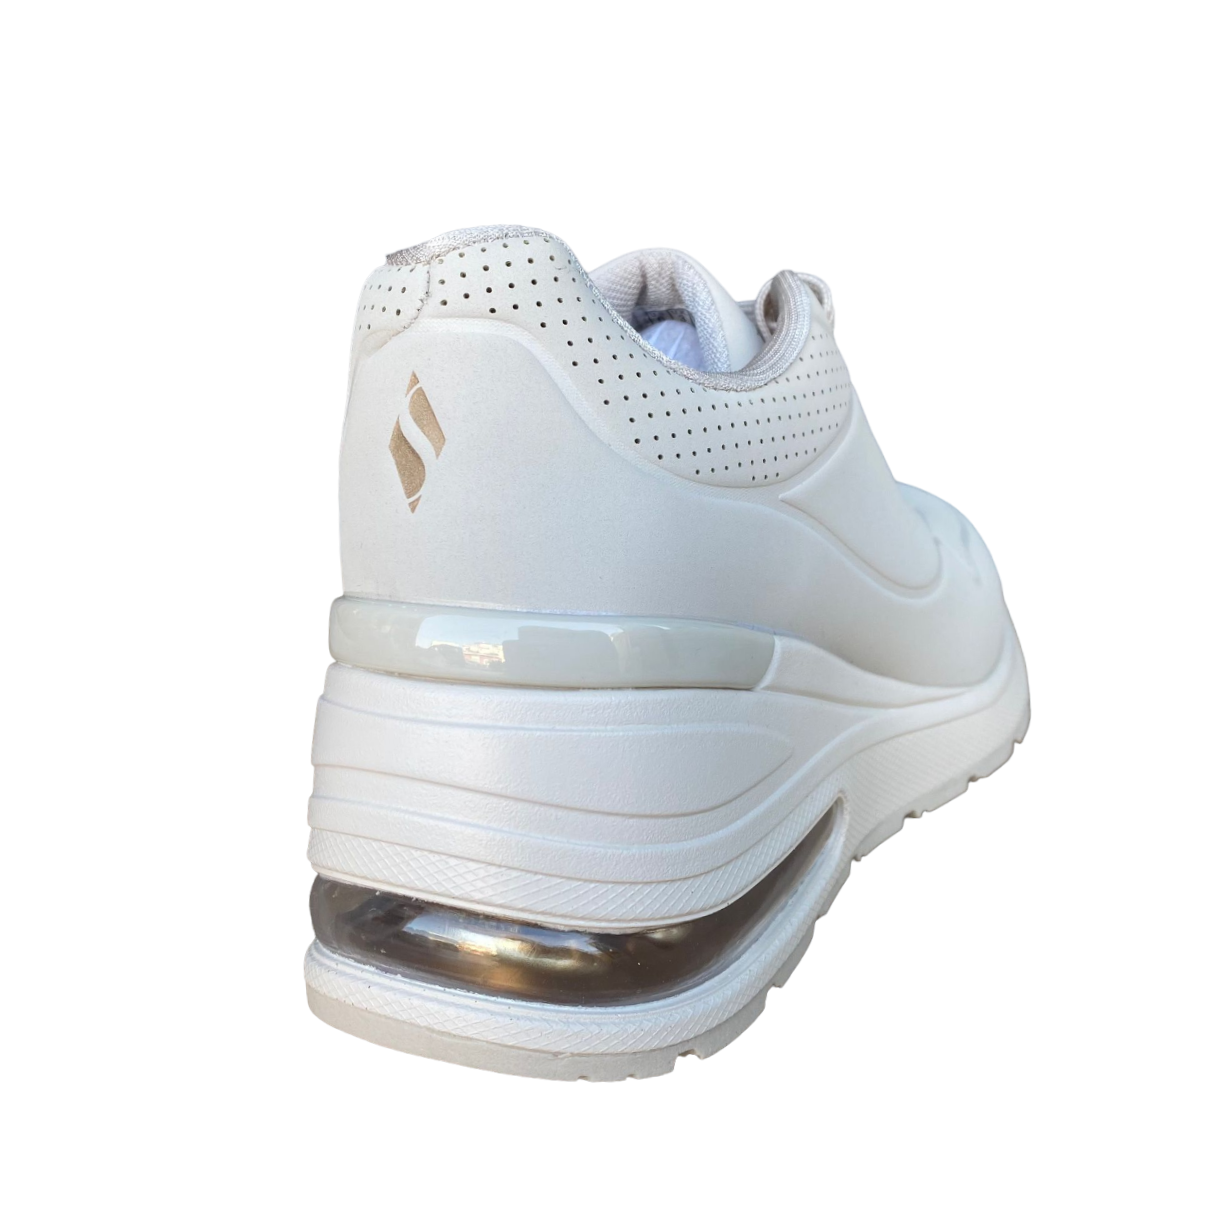 Skechers scarpa sneakers da donna Million Air Elevated 155401/OFWT bianco spento